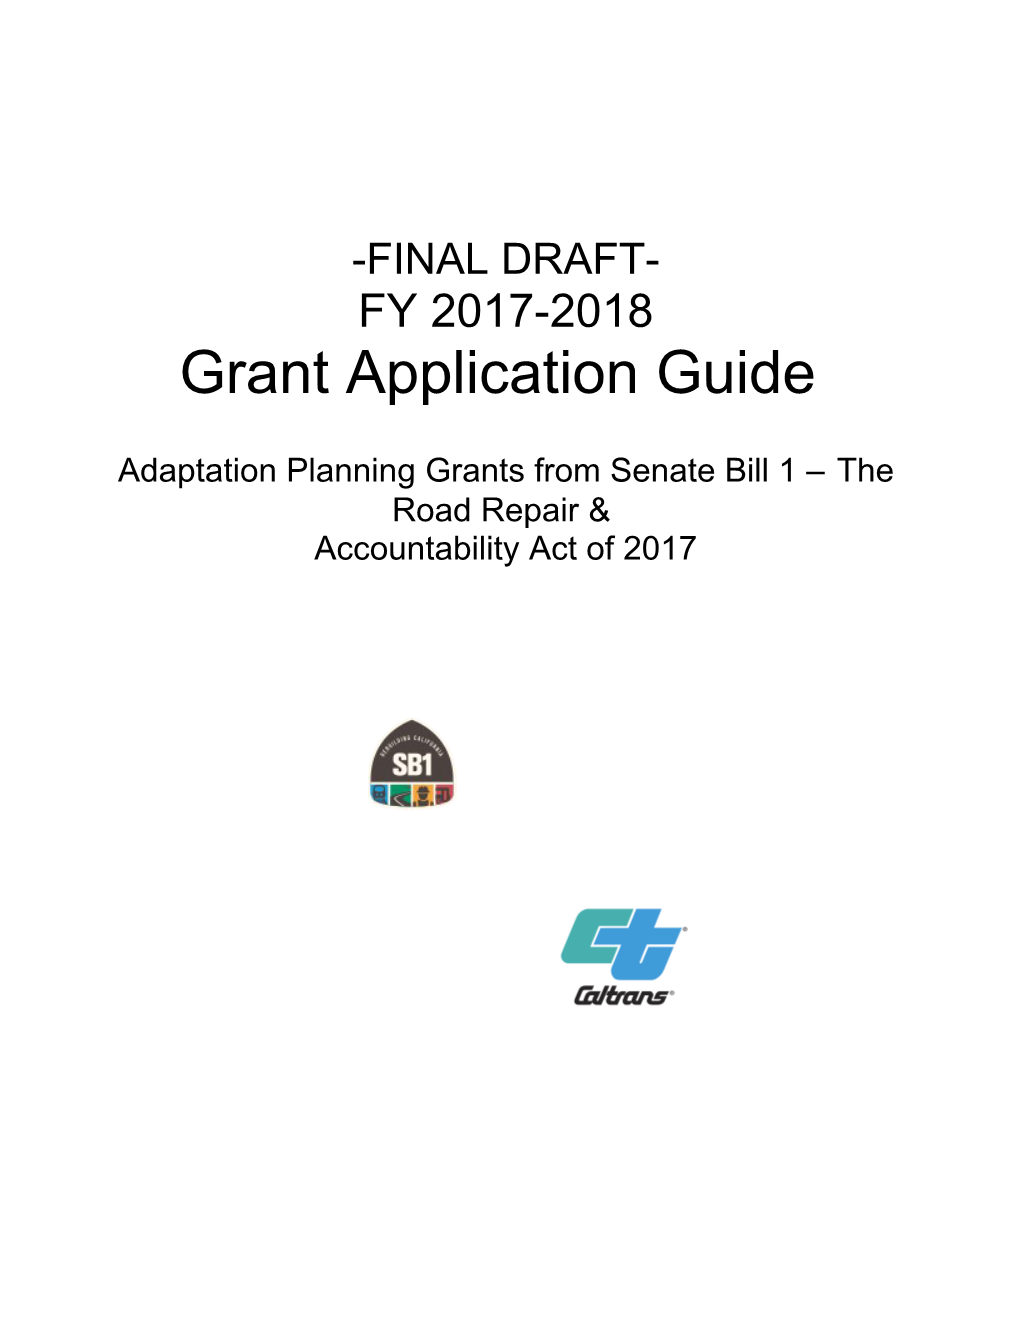 Grant Application Guide